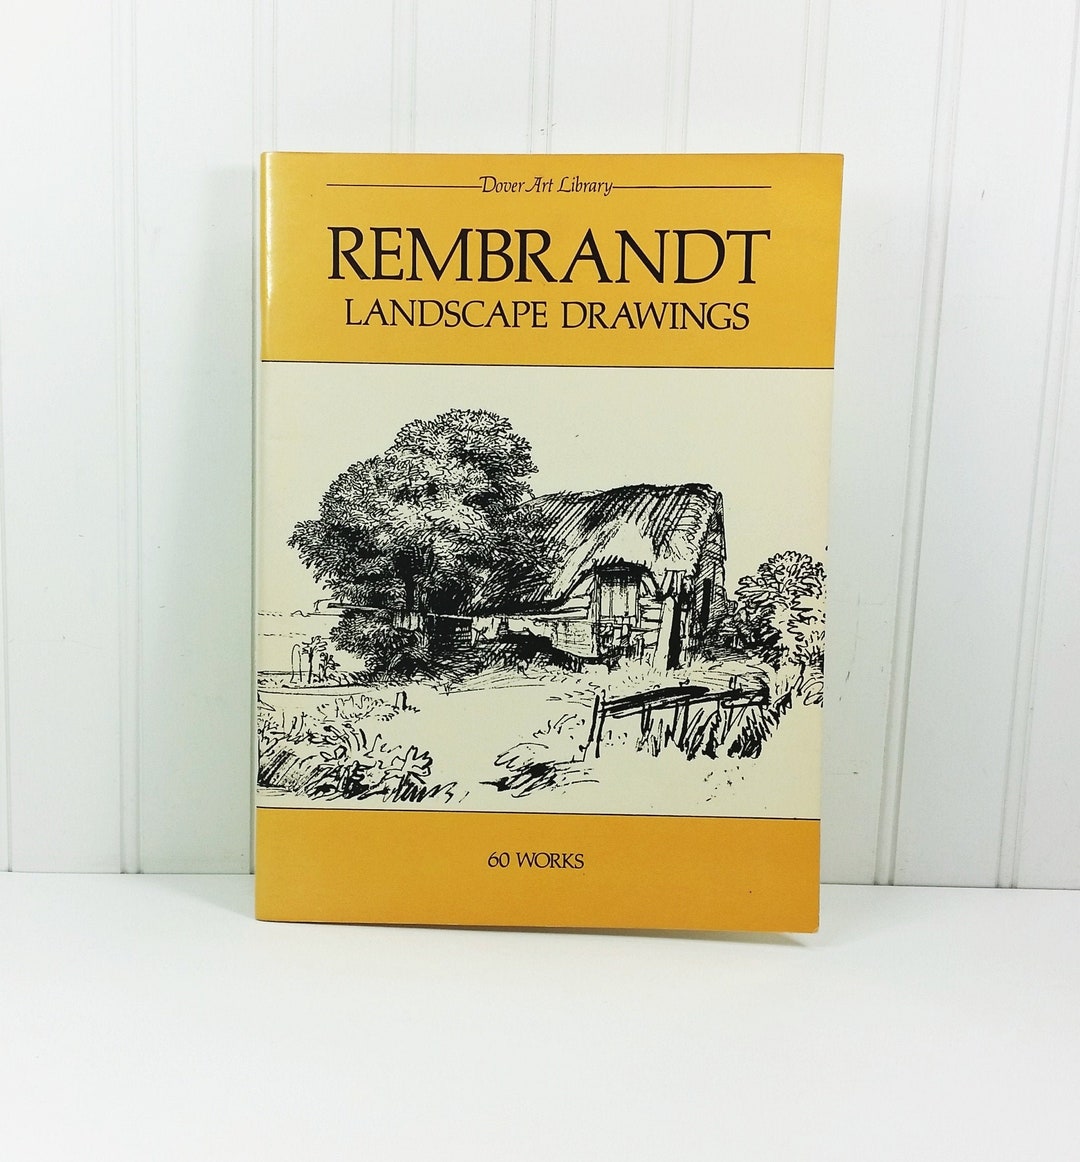 Rembrandt　Art　1981　Etsy　Landscape　Drawings　60　Works　Dover　Library